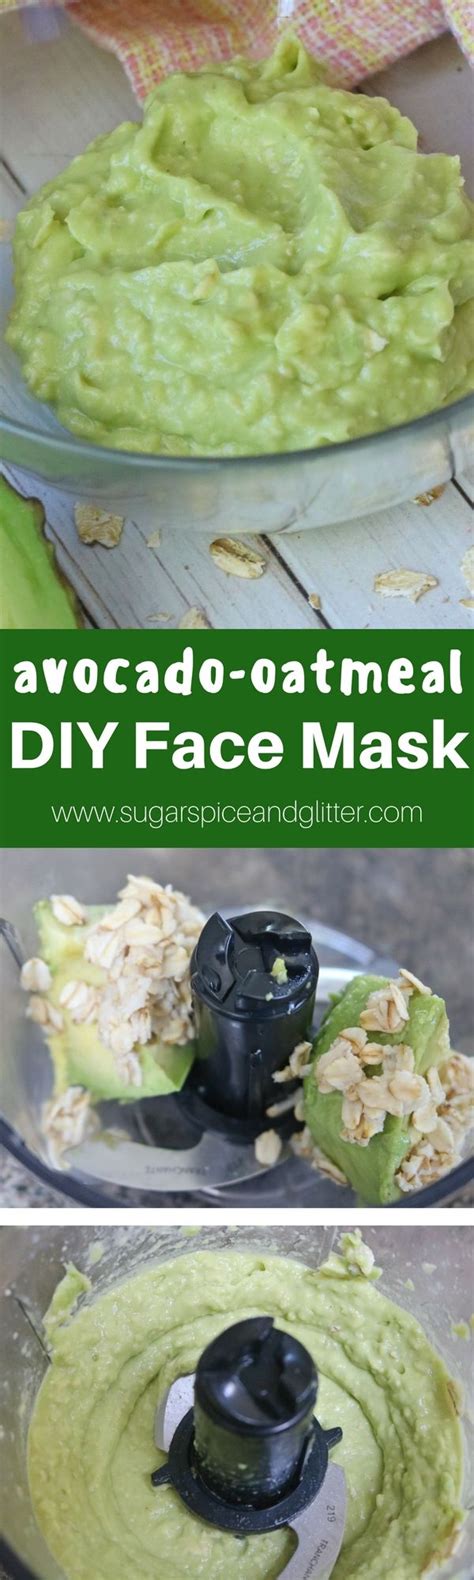 Diy Calming Face Mask Recipe With Avocado Honey And Oatmeal A Homemade Beauty Recipe So Safe